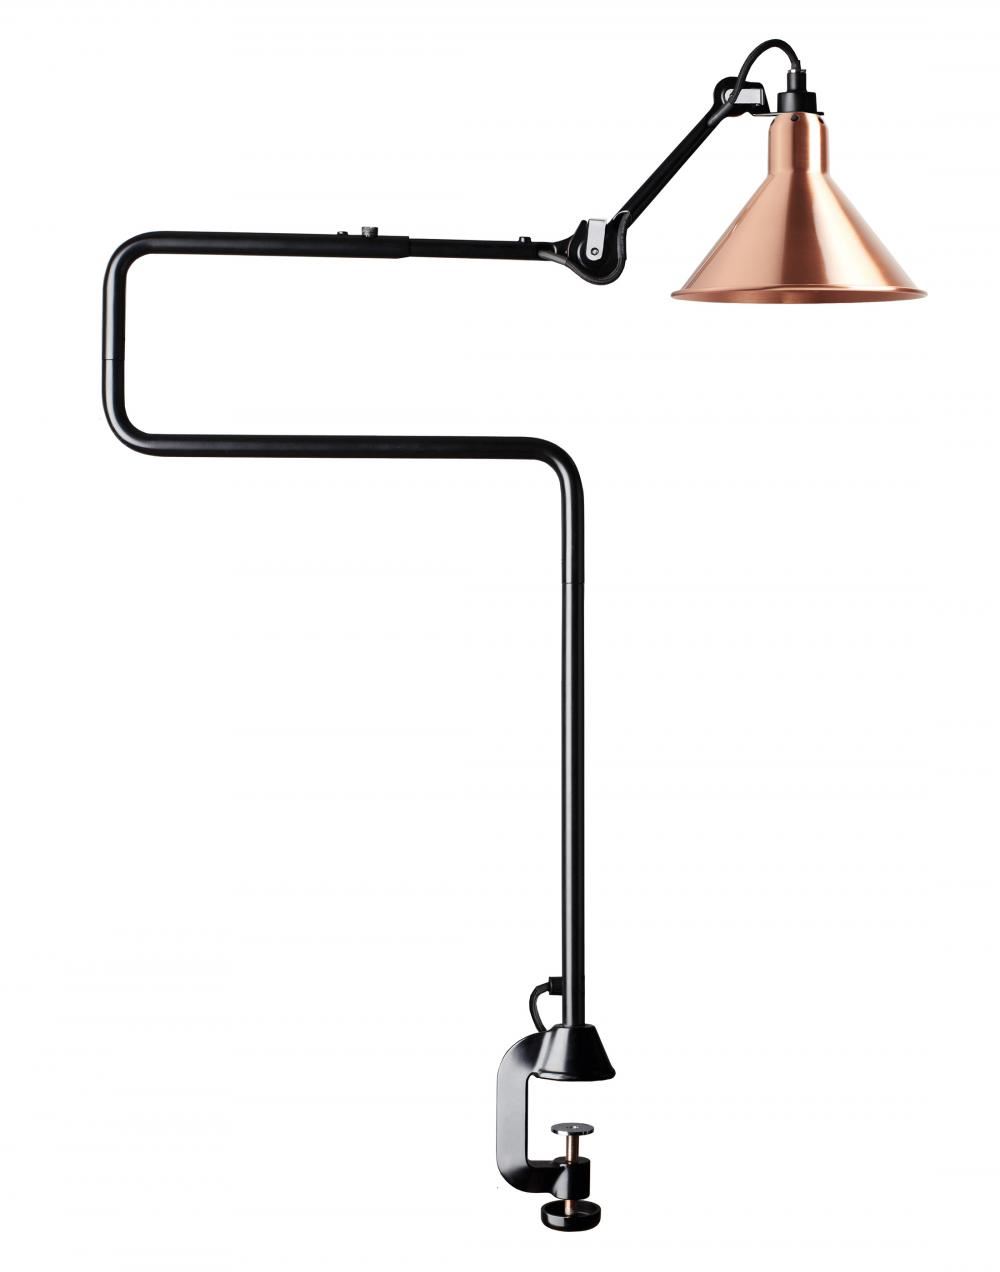 Lampe Gras 211311 Architect Lamp Copper Shade With White Interior Conic